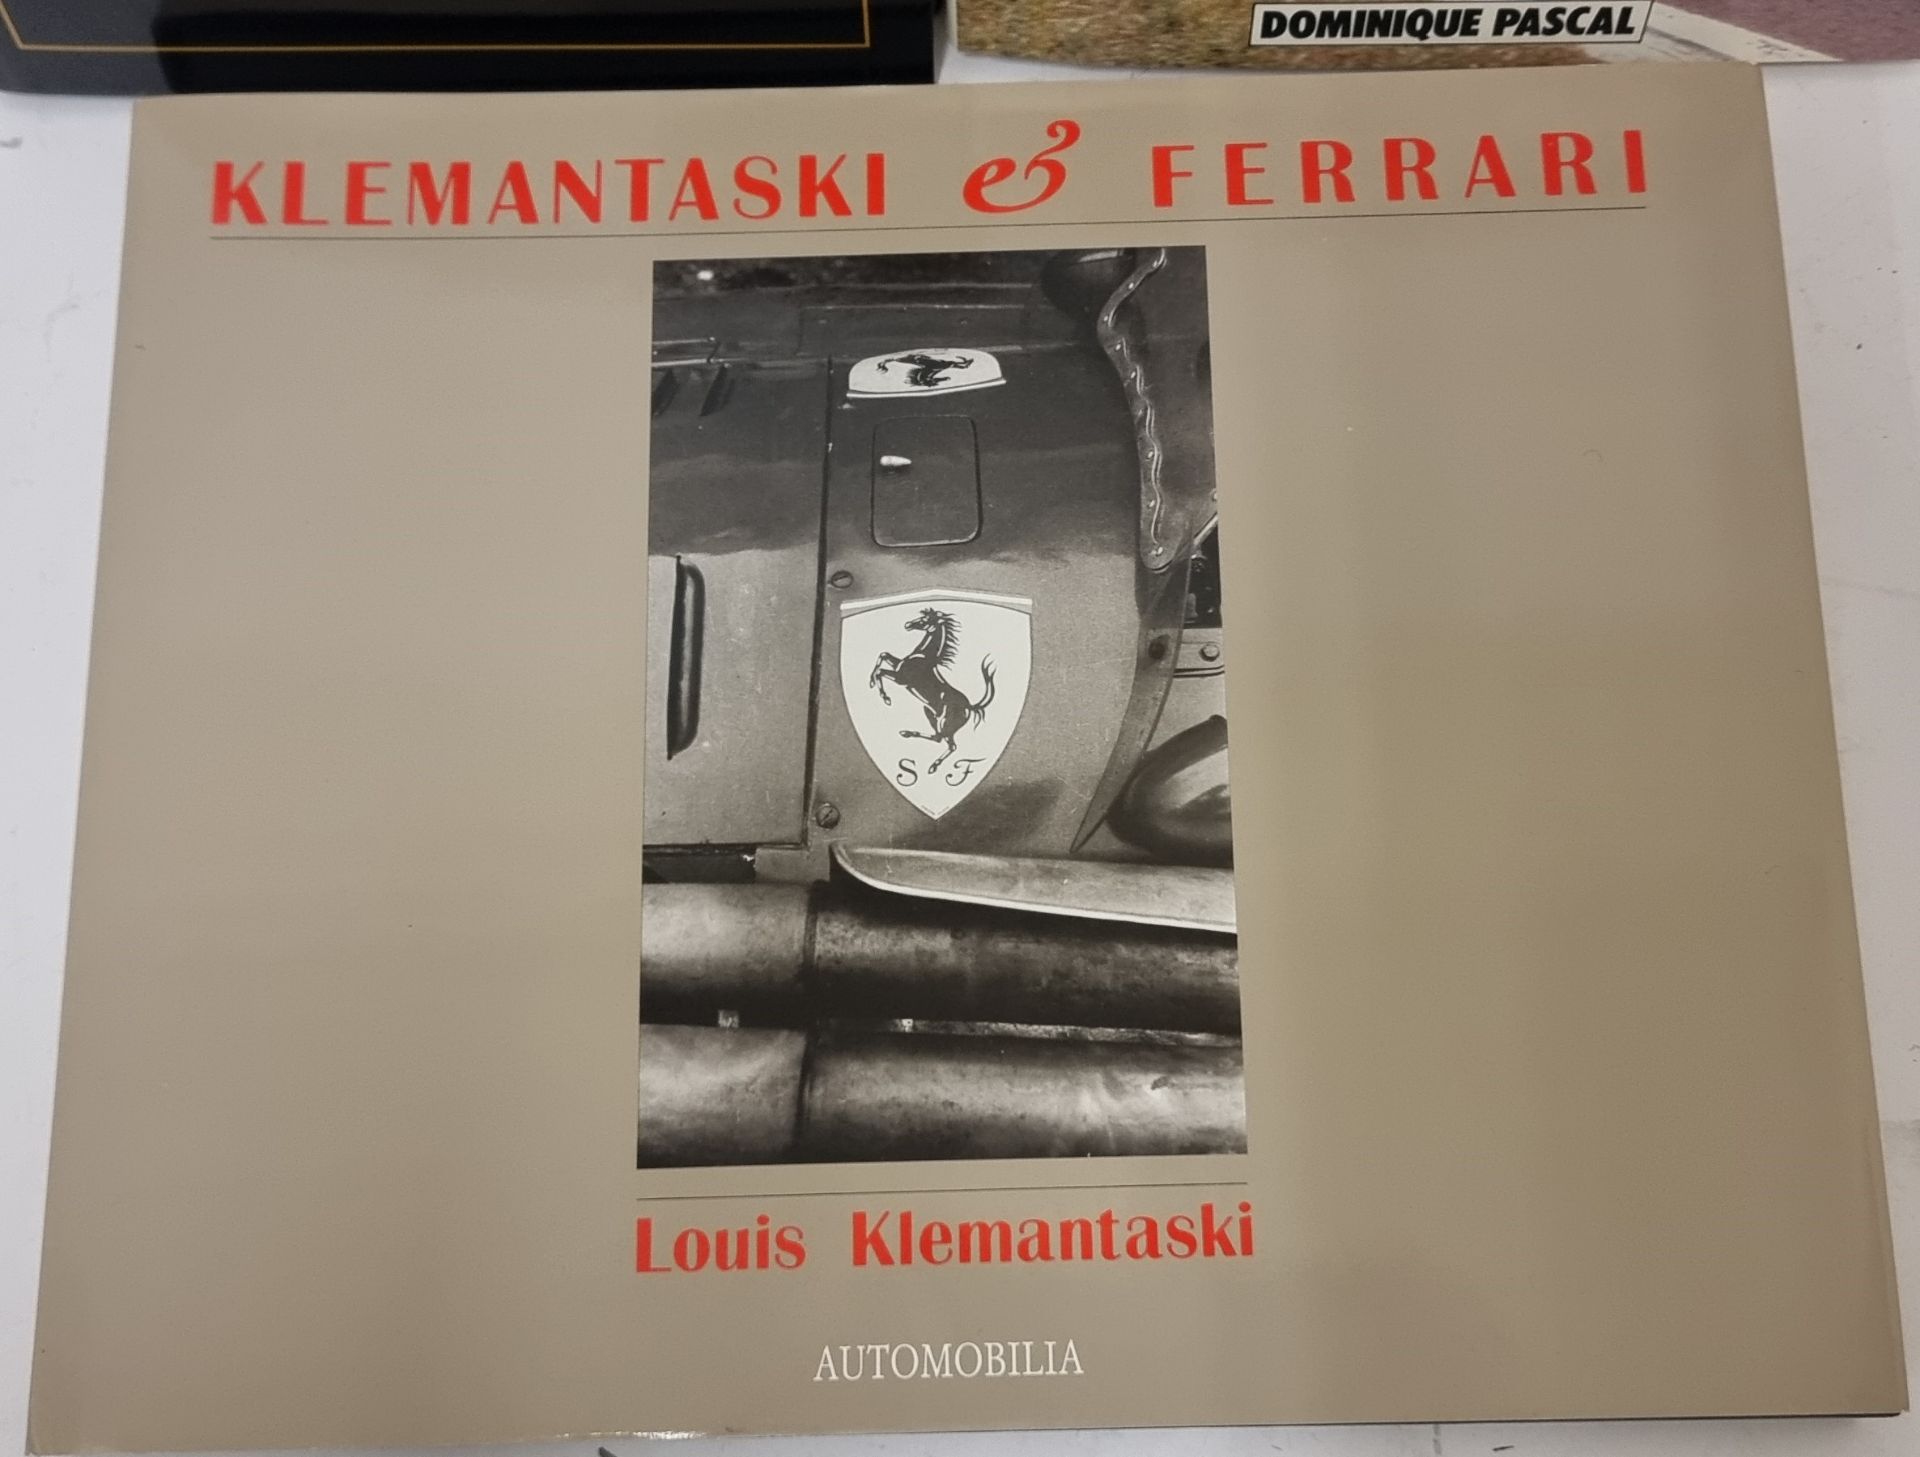 Klemantaski & Ferrari, published in 1992 by Automobilia, Ferraris at Le Man by Dominique Pascal - Image 3 of 4